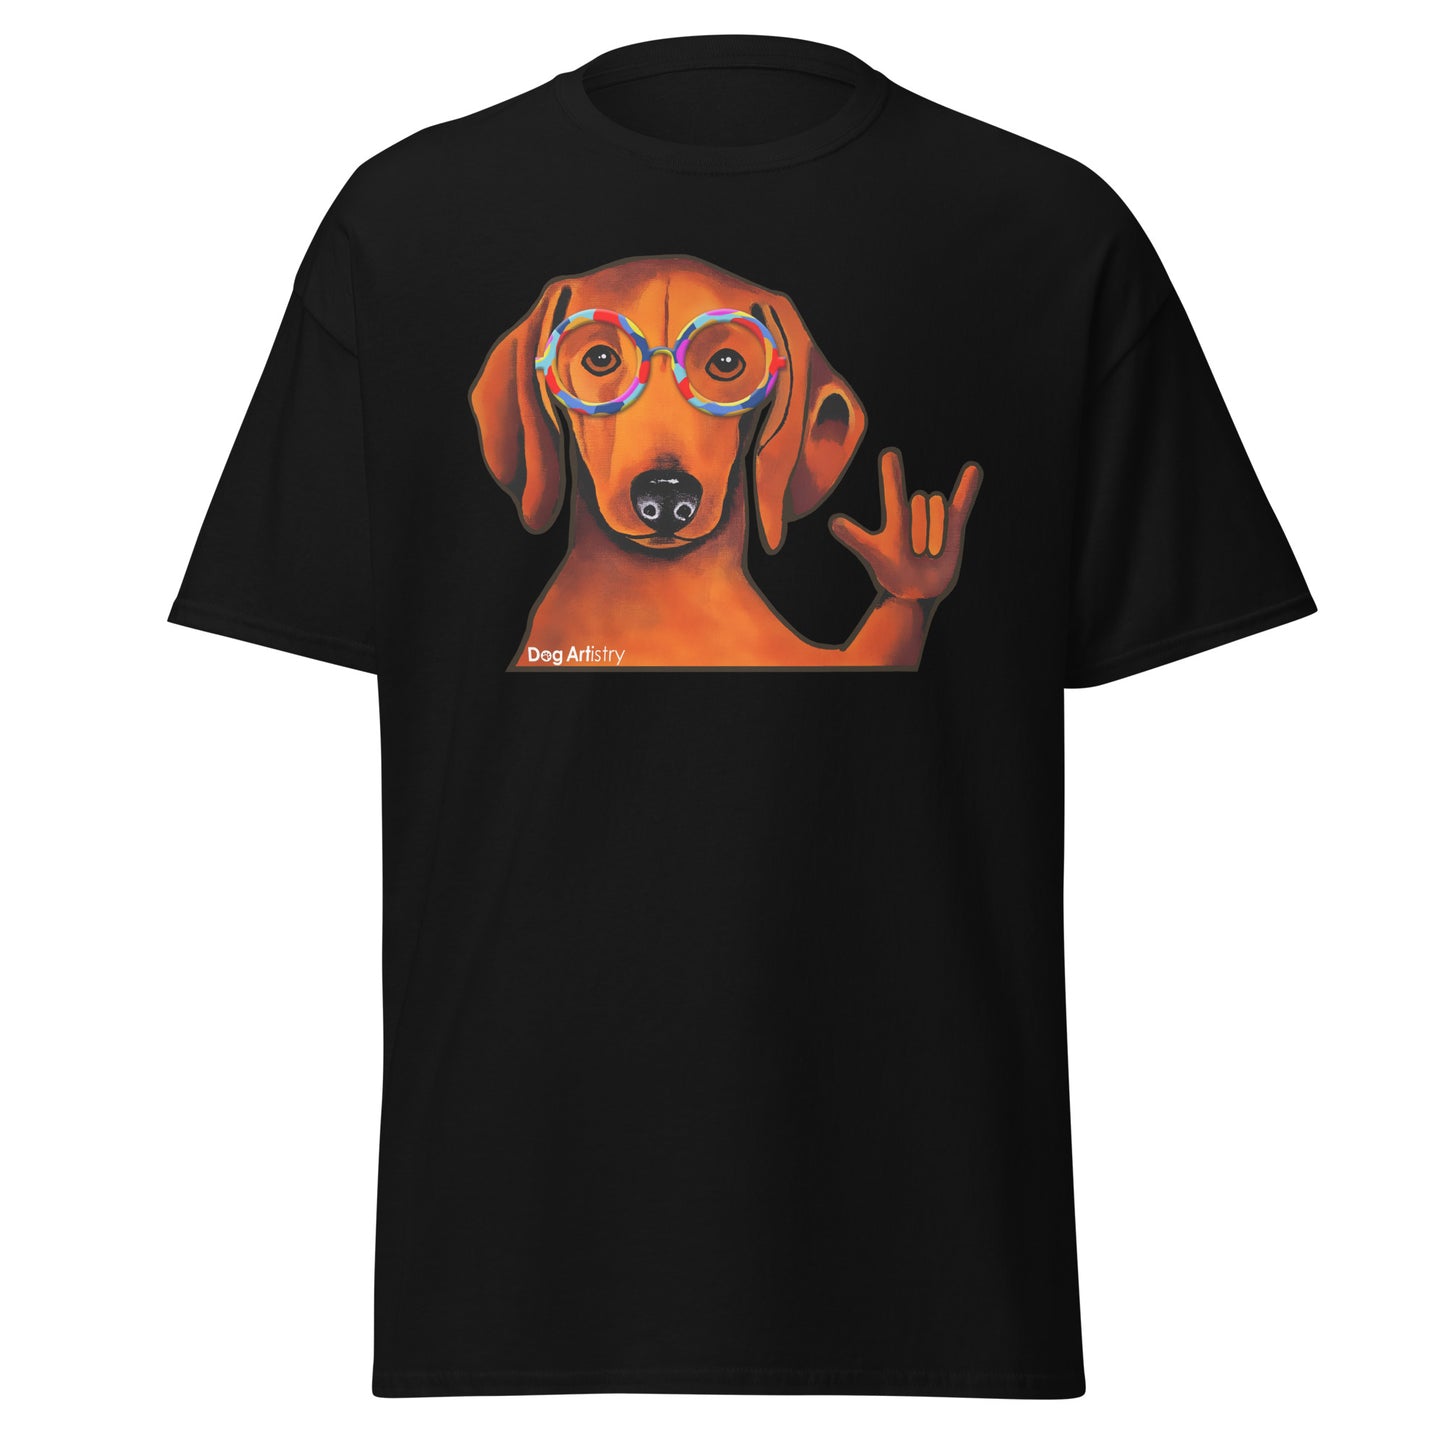 Dachshund doing the Love sign men's t-shirt black by Dog Artistry